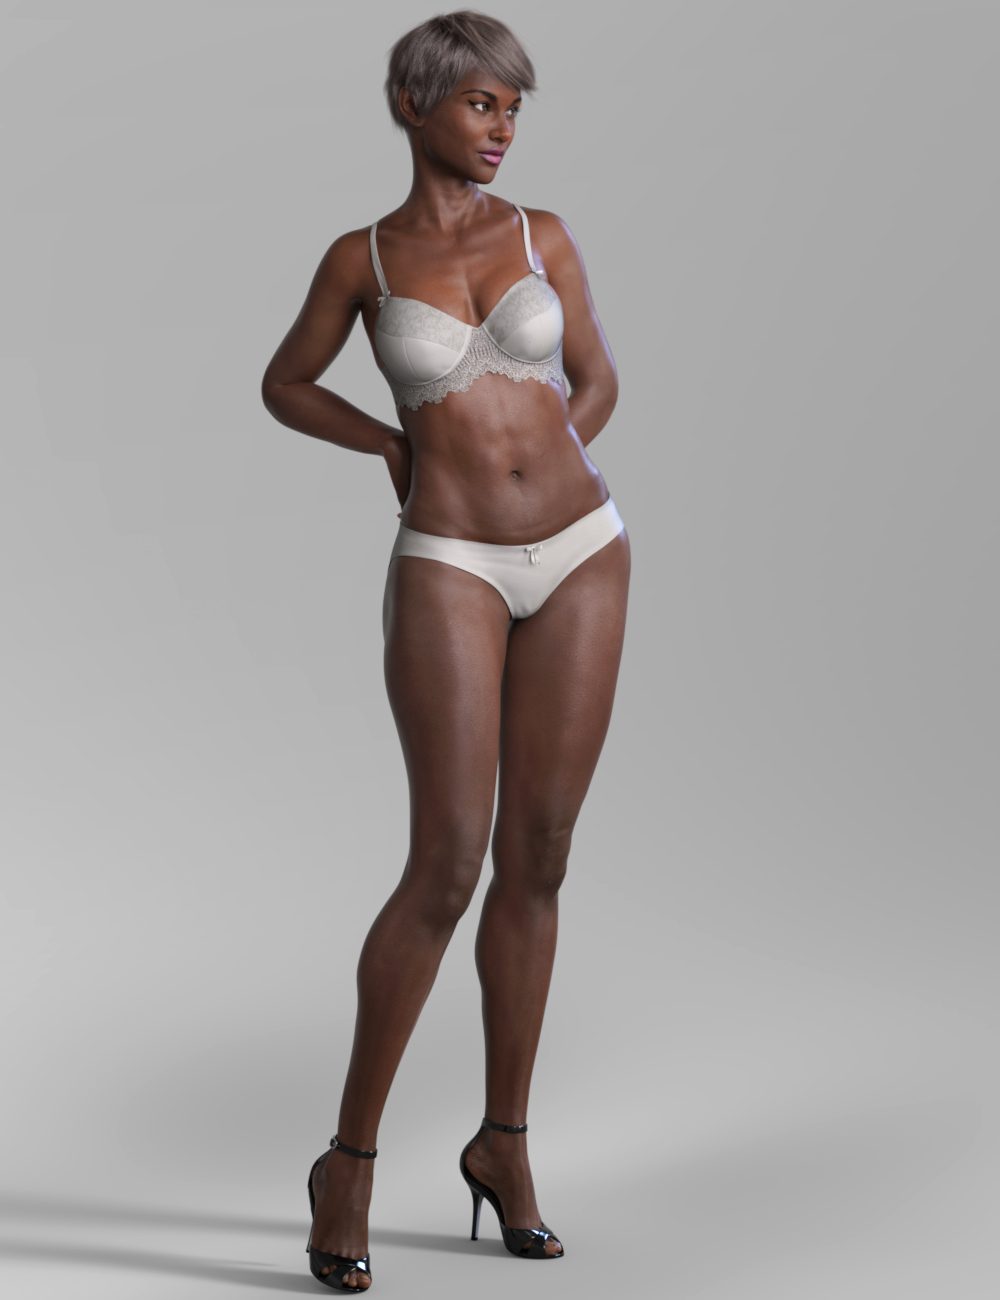 RY Tessa for Victoria 8 by: Raiya, 3D Models by Daz 3D